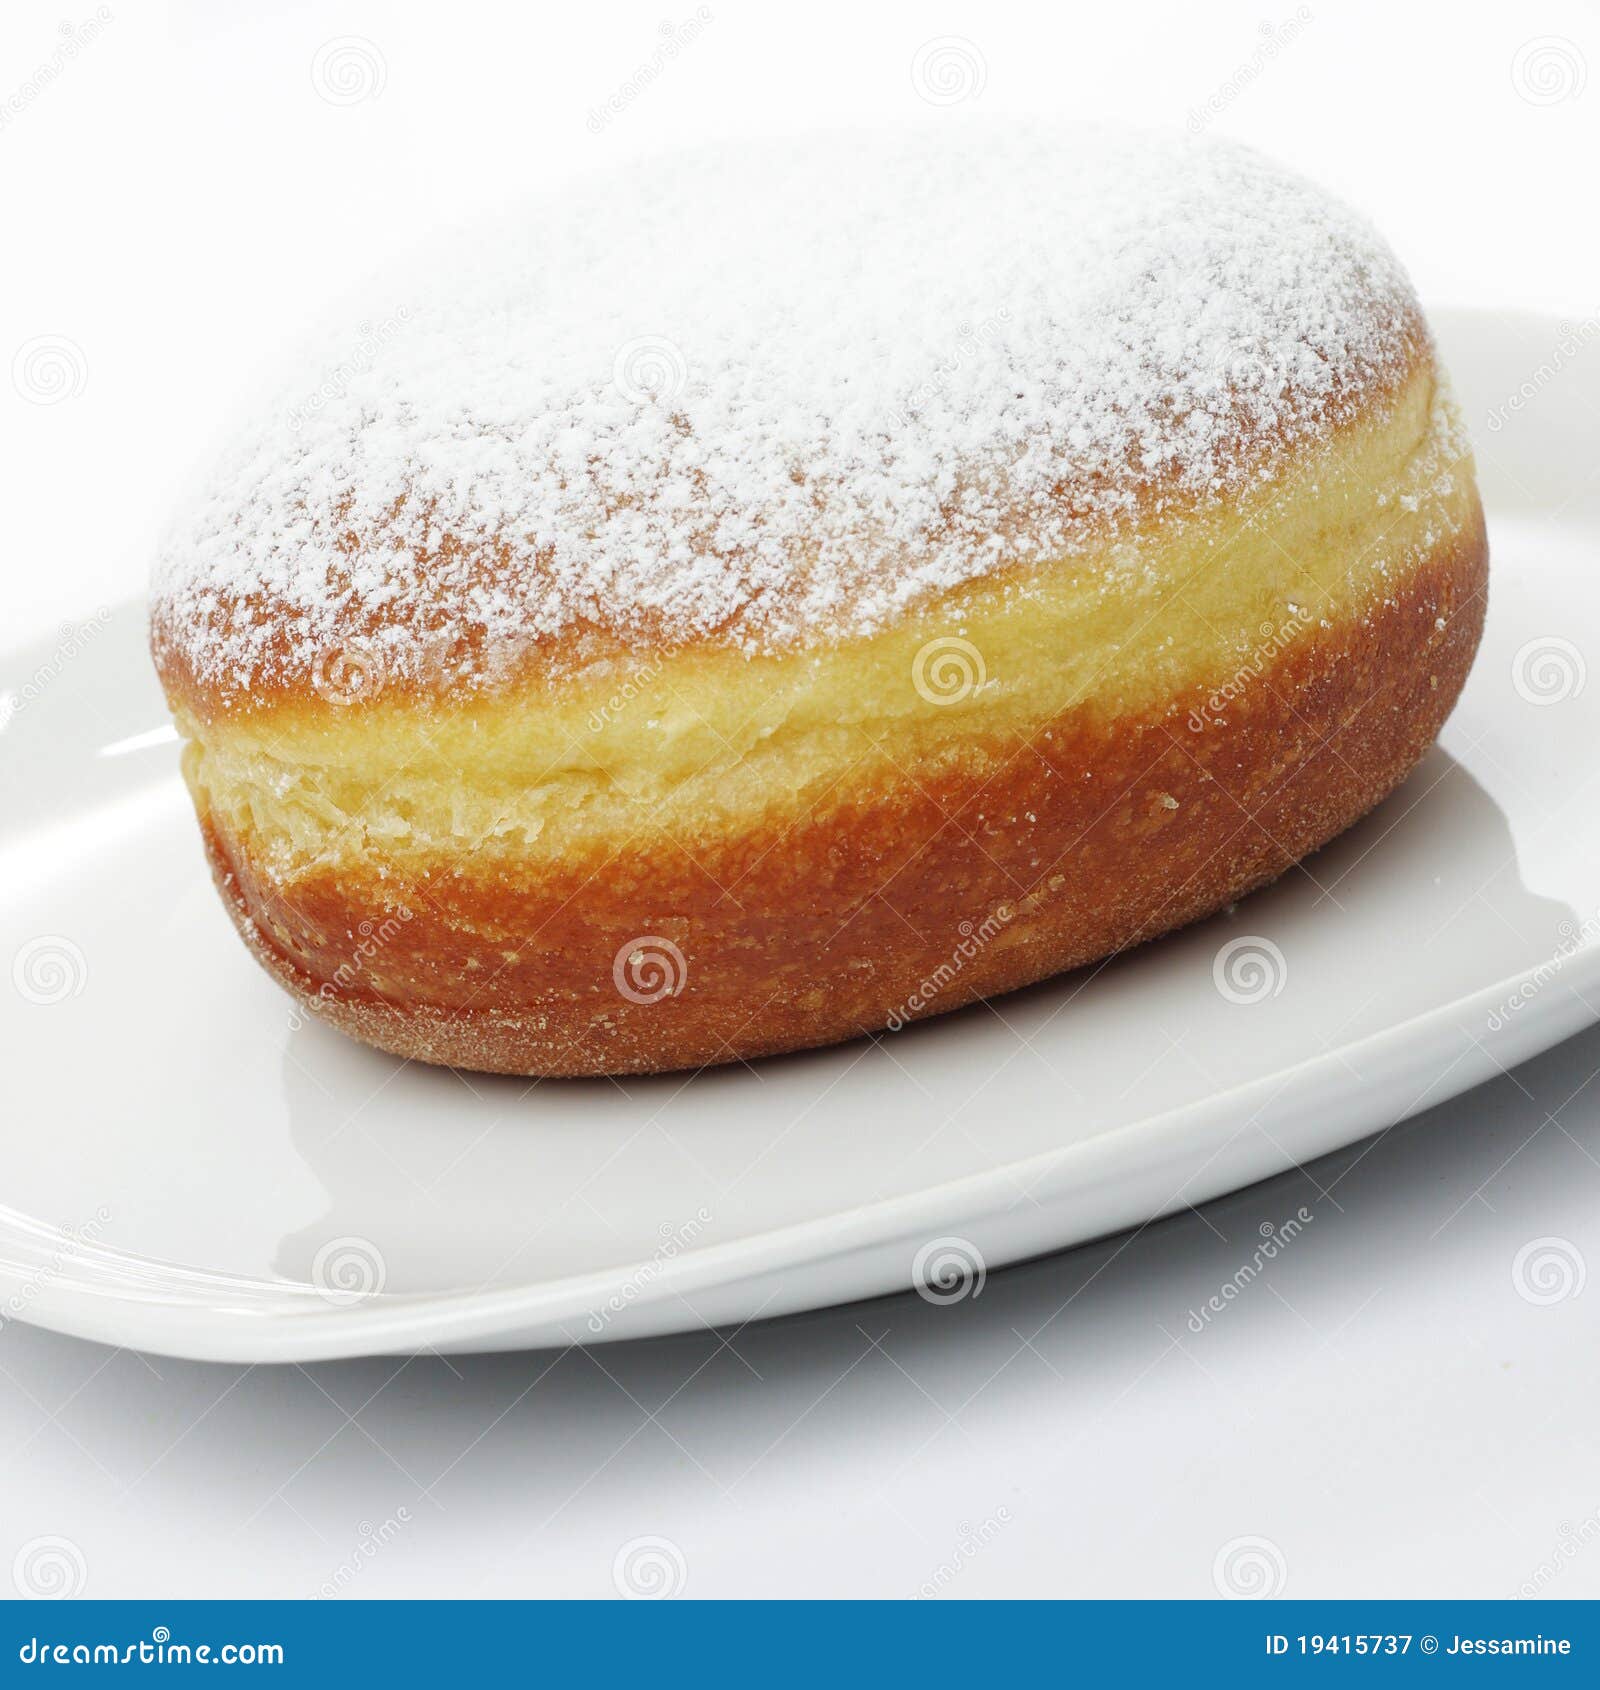 slovenian doughnut